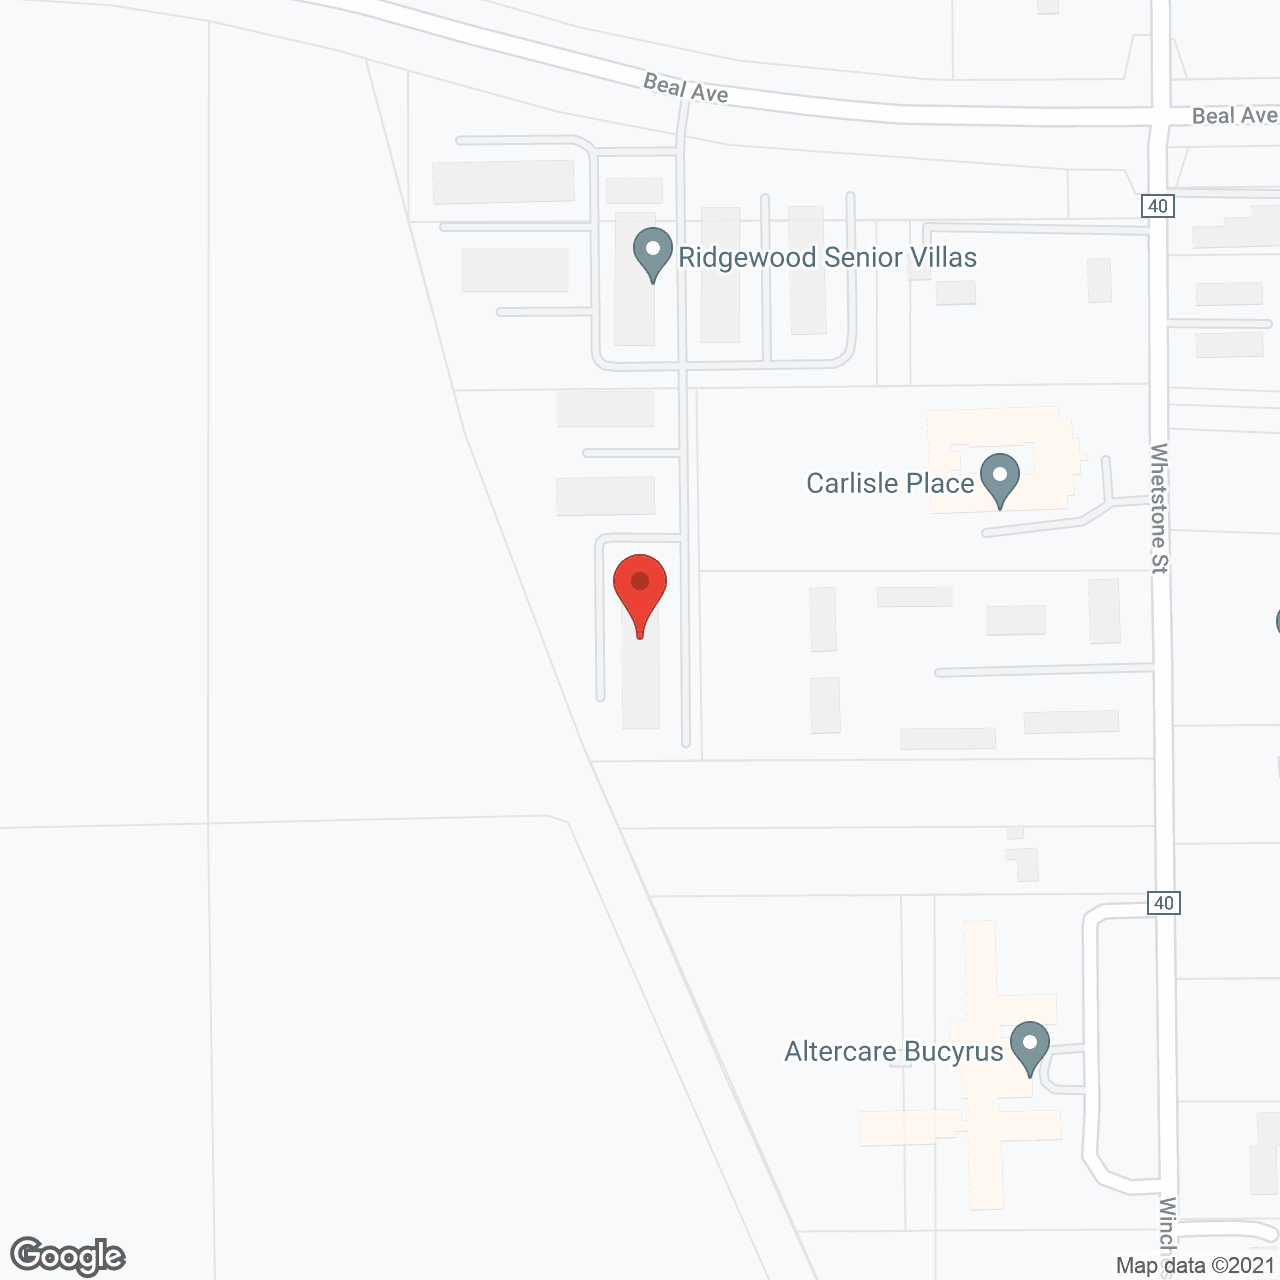 Ridgewood Senior Villas in google map